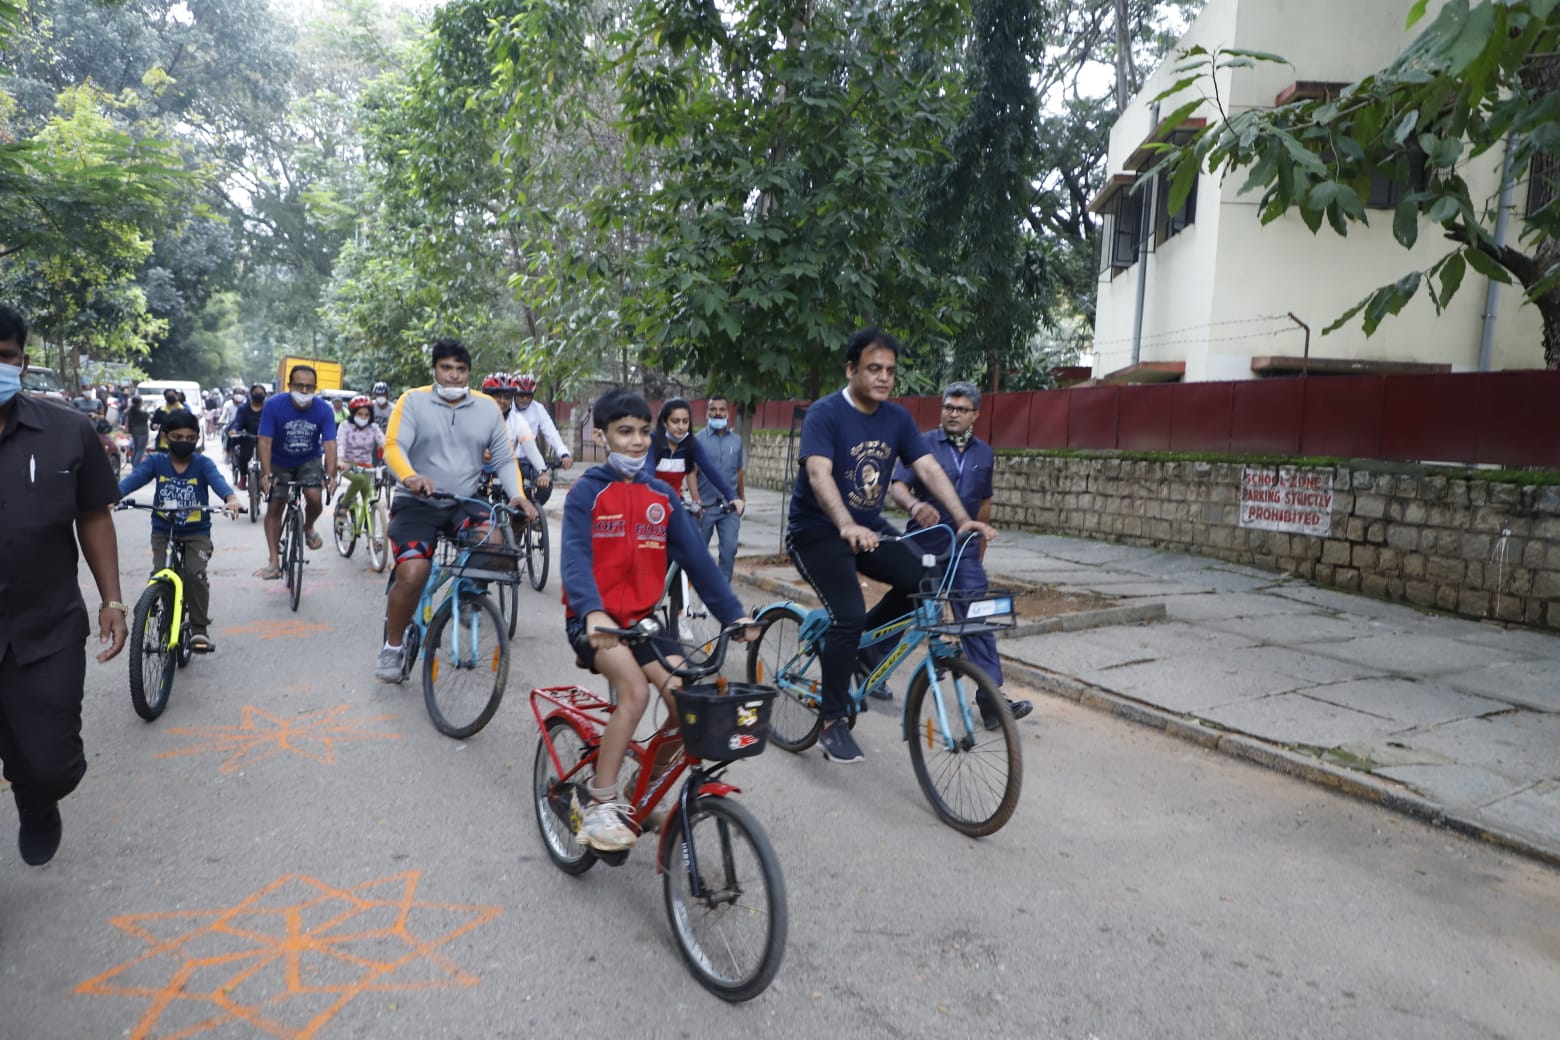 Karnataka Minister Ashwathnarayan pedals 4.2 km for ‘public health and environment’!